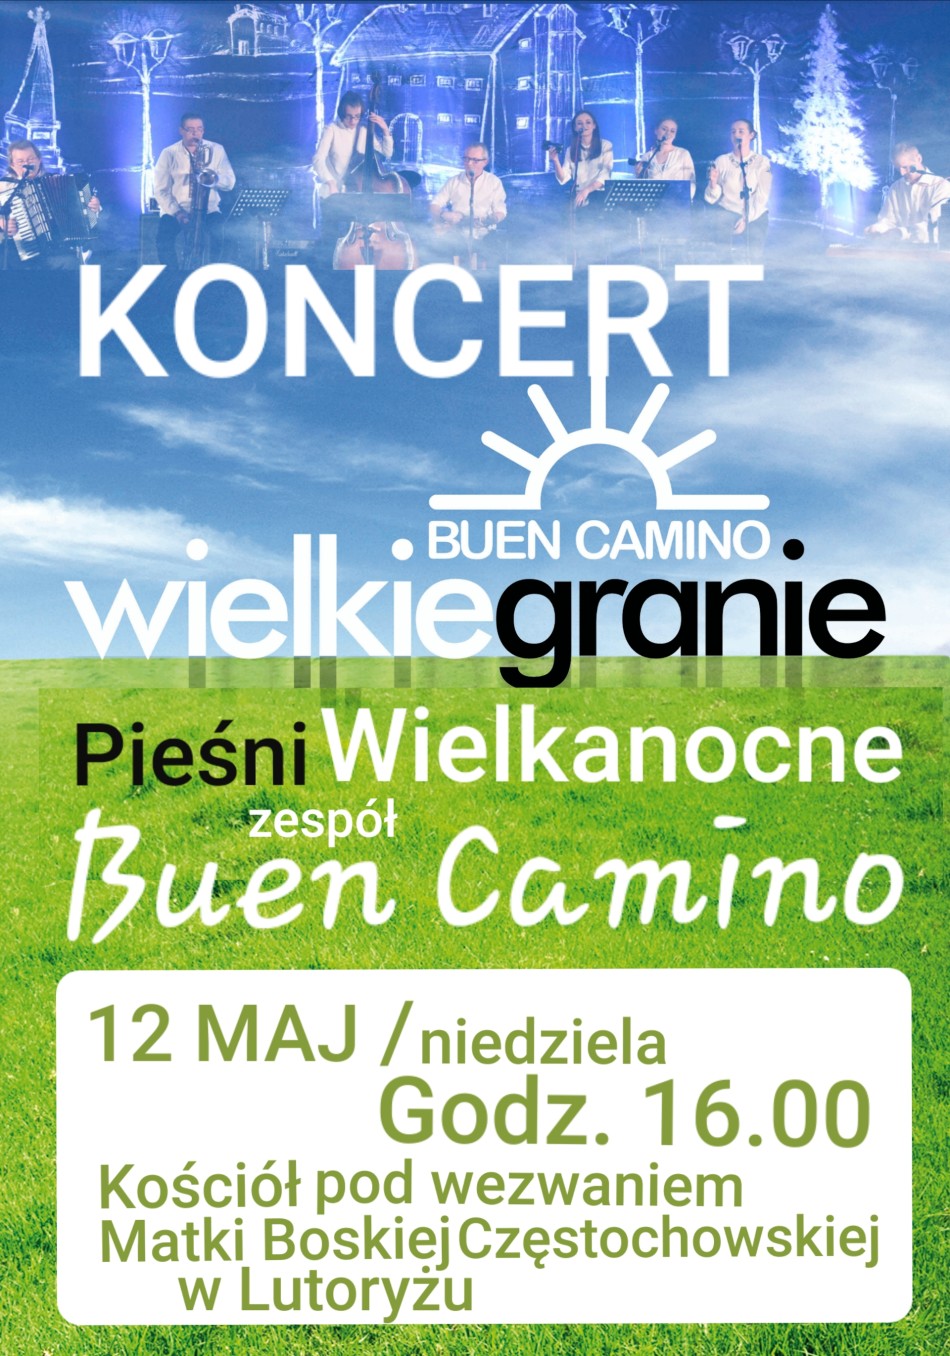 Plakat - Koncert Wielkanocny Buen Camino w Lutoryżu.